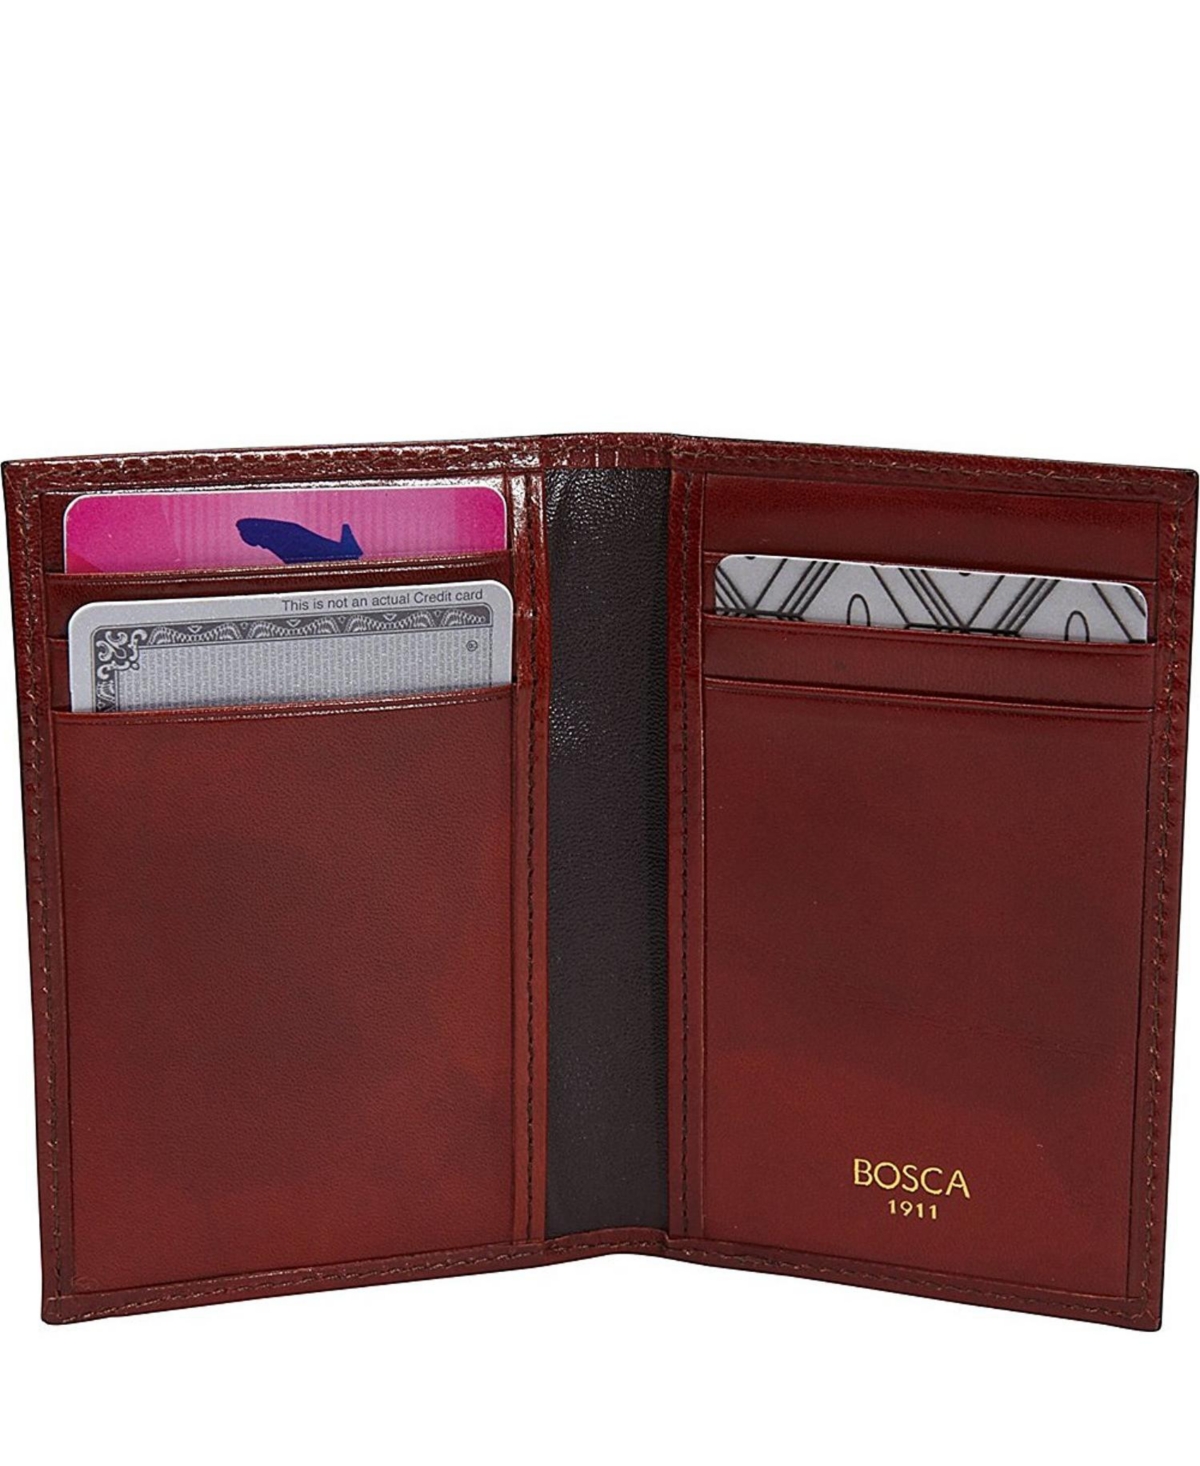 Men's Genuine Leather 8 Pocket Credit Card Case - Dark brown